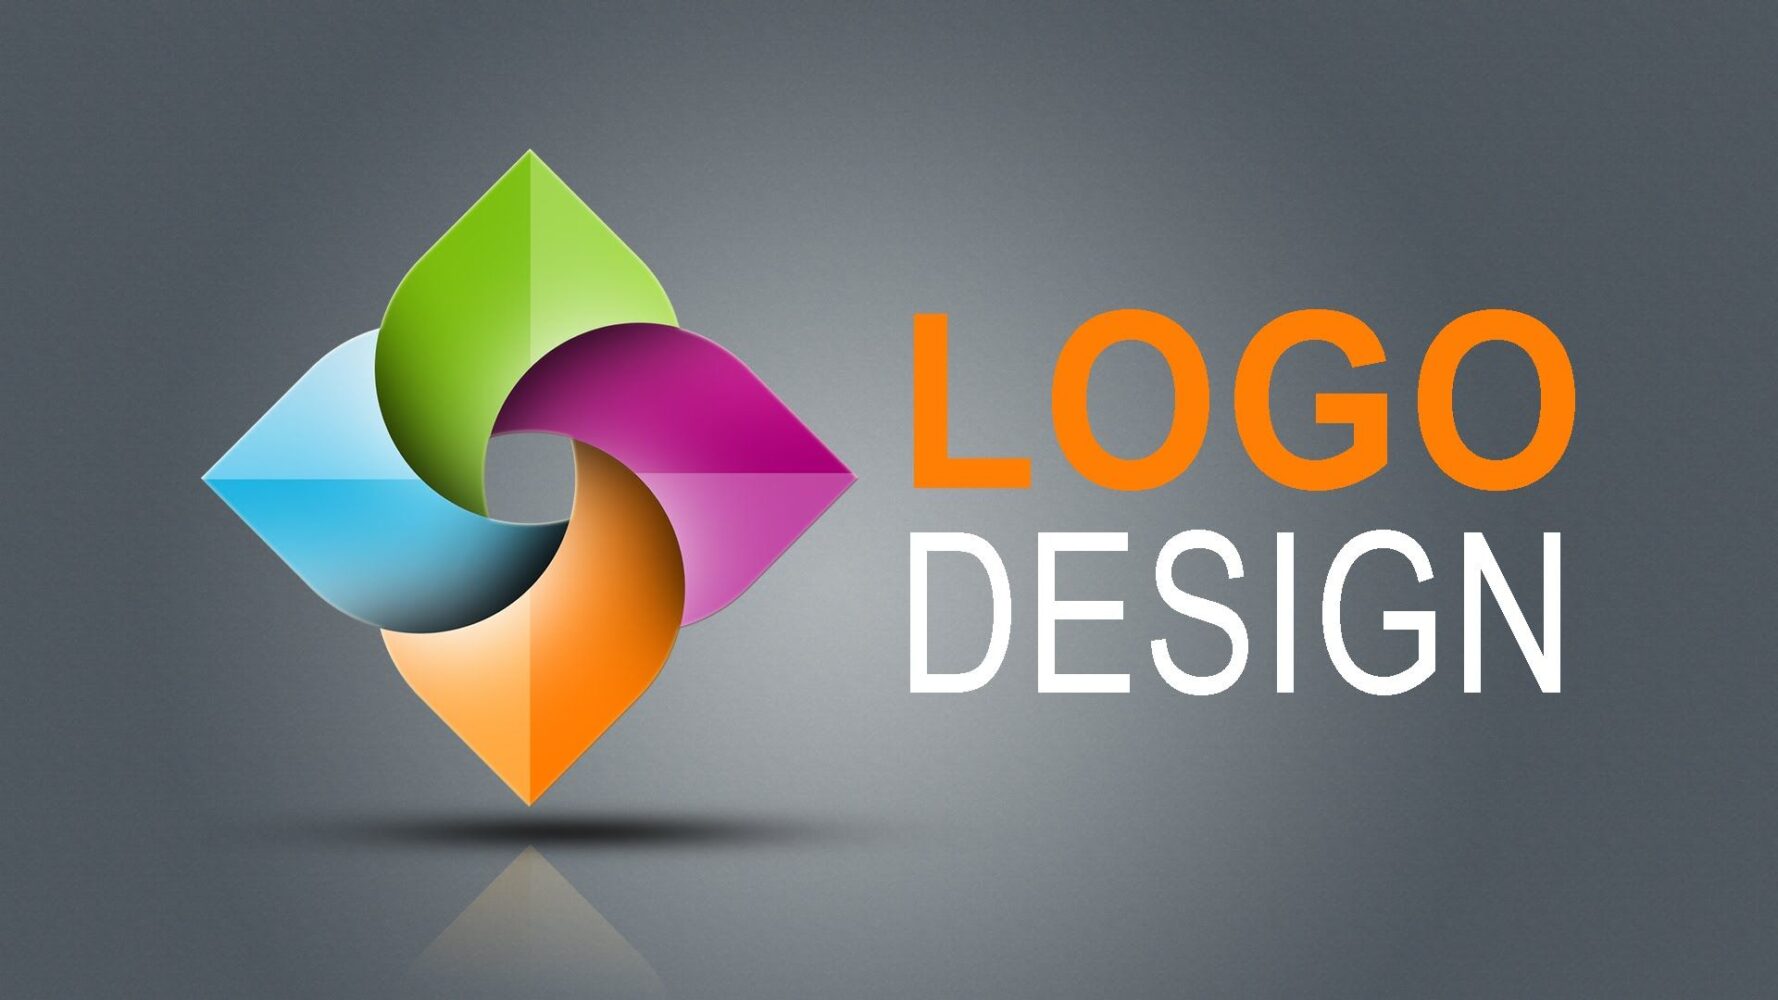 Logo Design: The Brand Identities